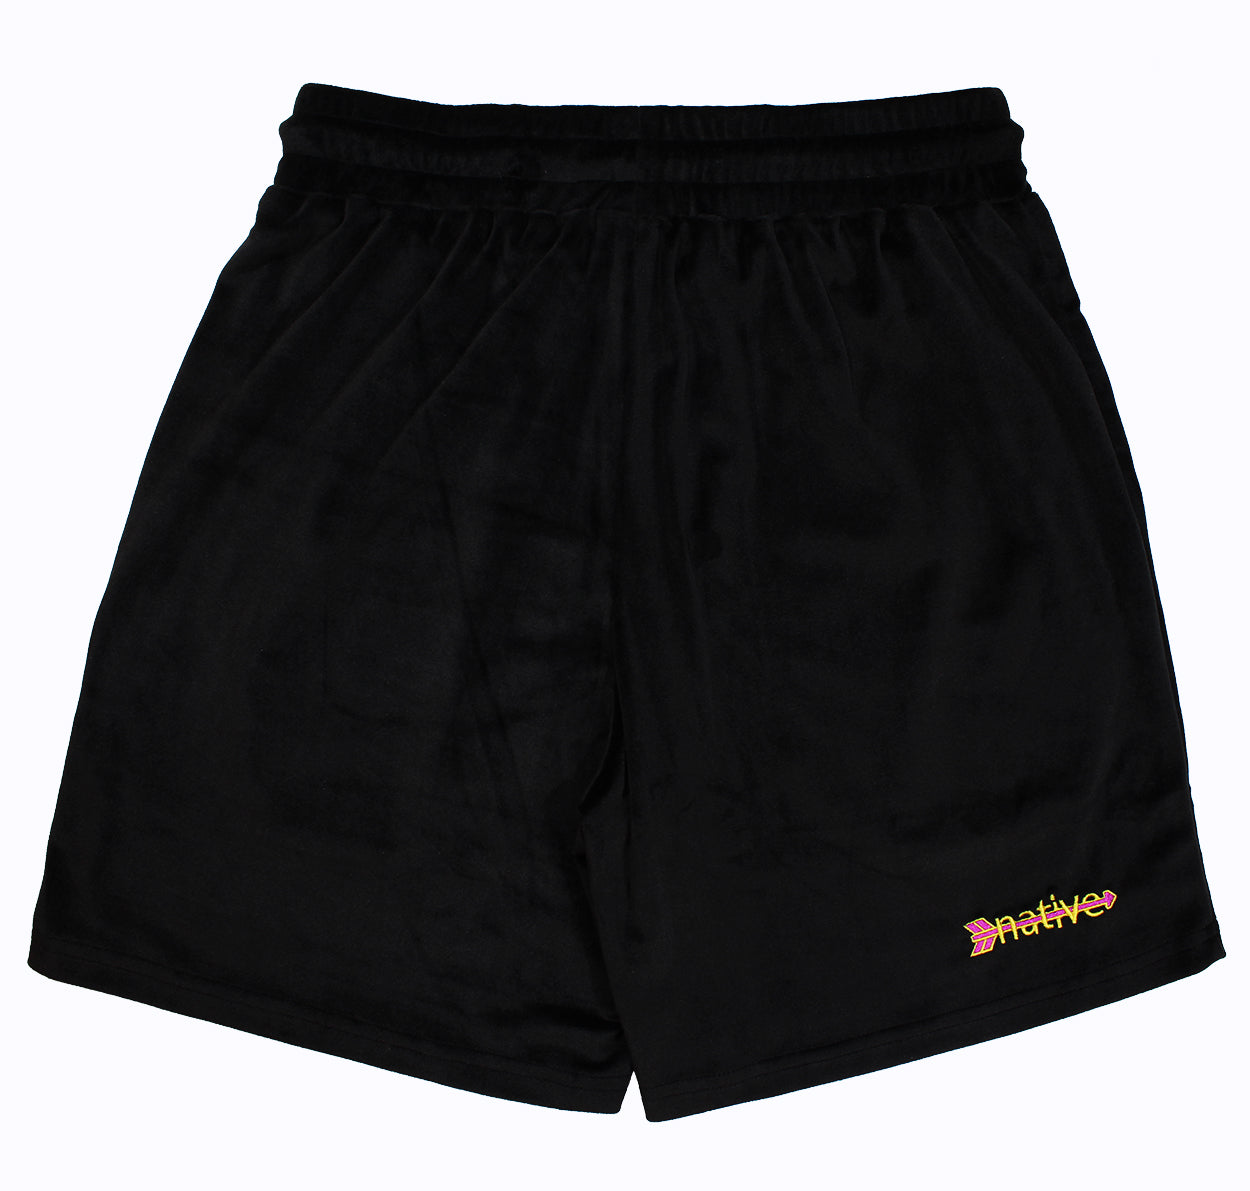 velour shorts in venice beach (black)